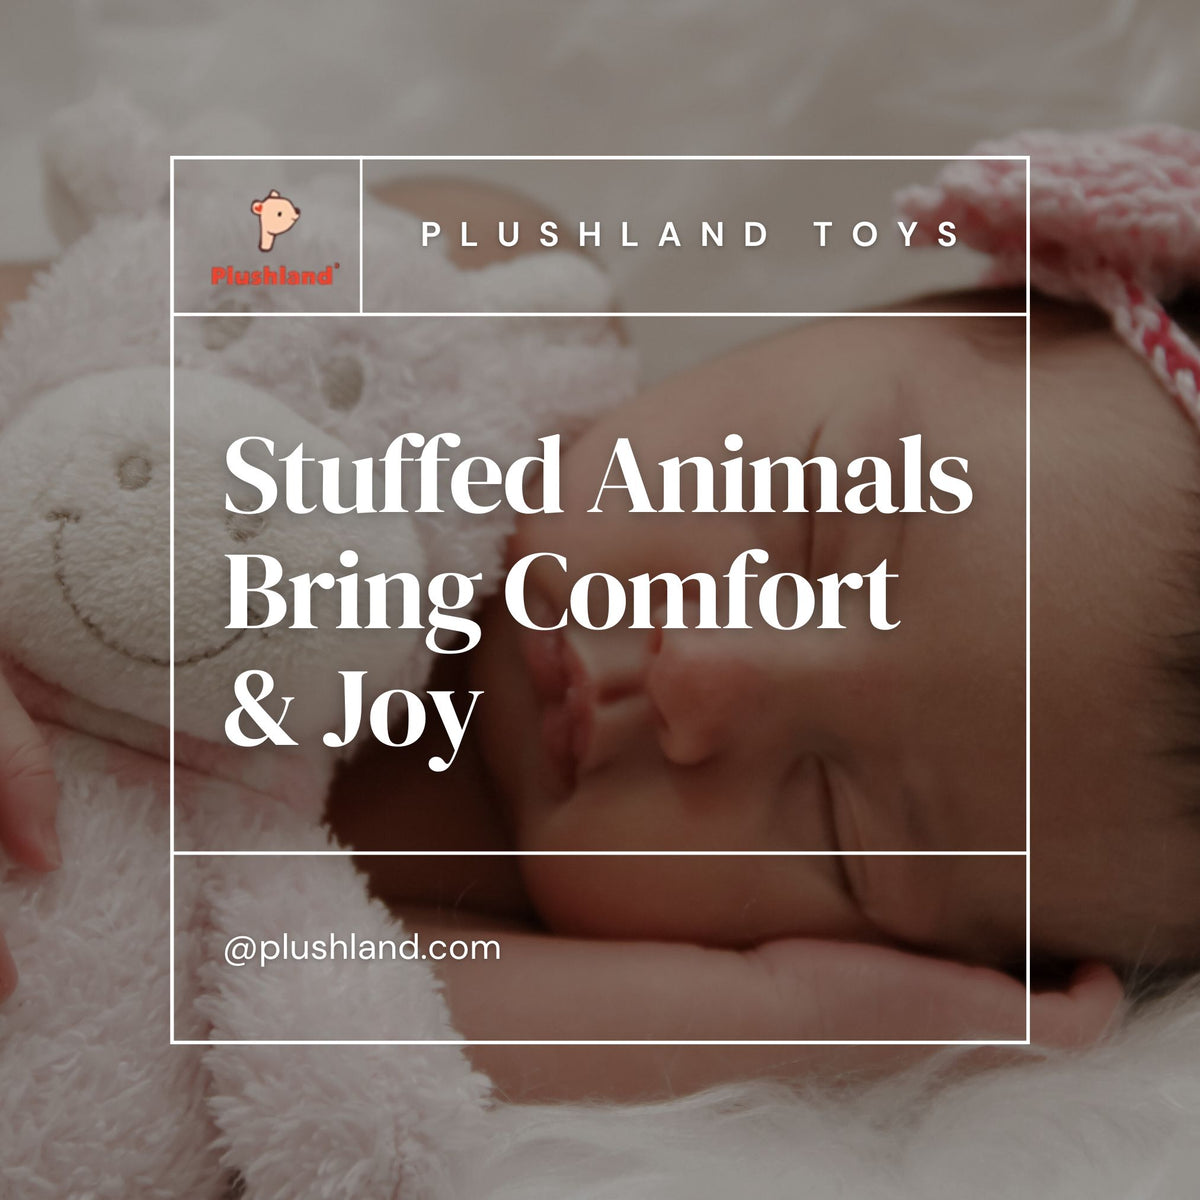 Stuffed animals bring comfort and joy